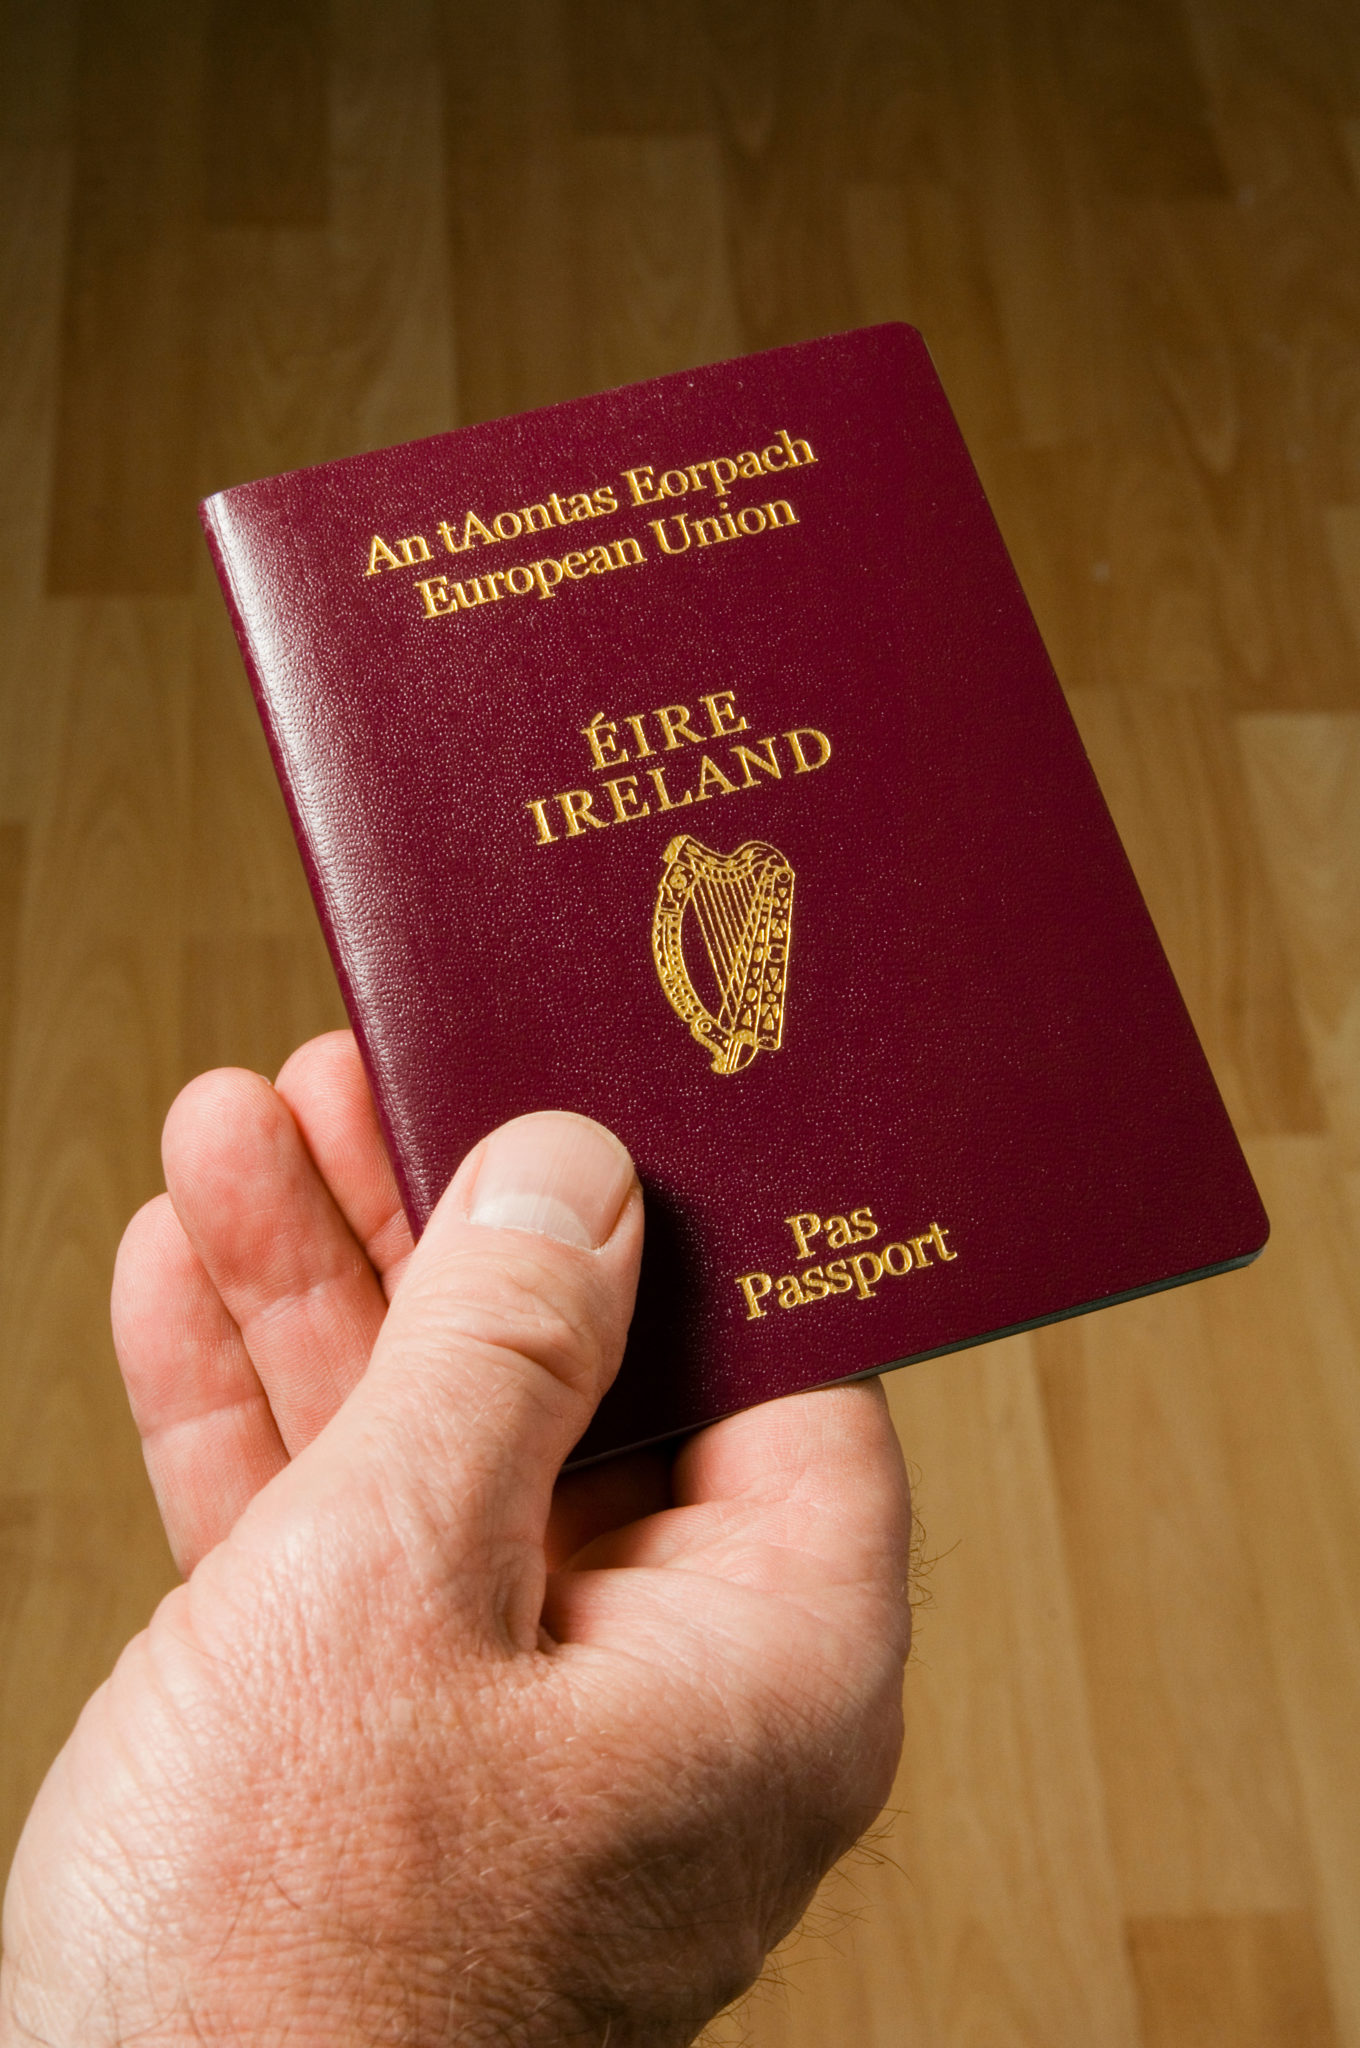 A man's hand holding an Irish passport in 2007